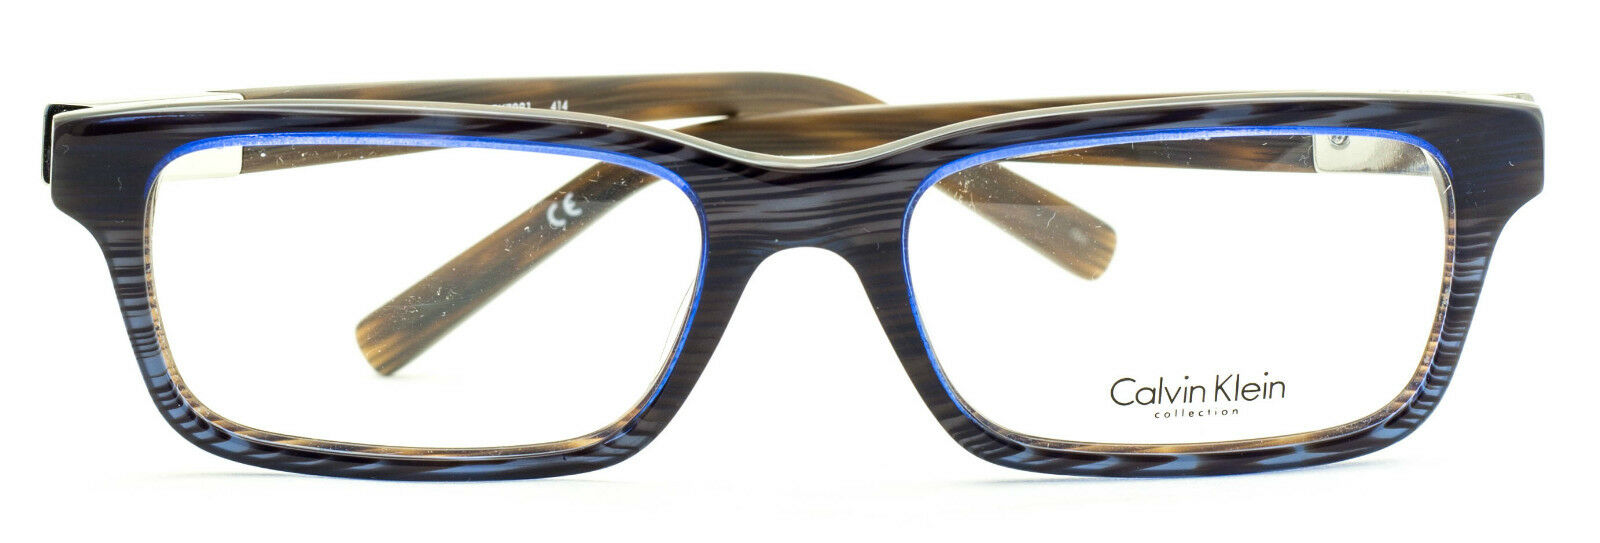 CALVIN KLEIN CK7881 414 Eyewear RX Optical FRAMES Eyeglasses Glasses - New BNIB